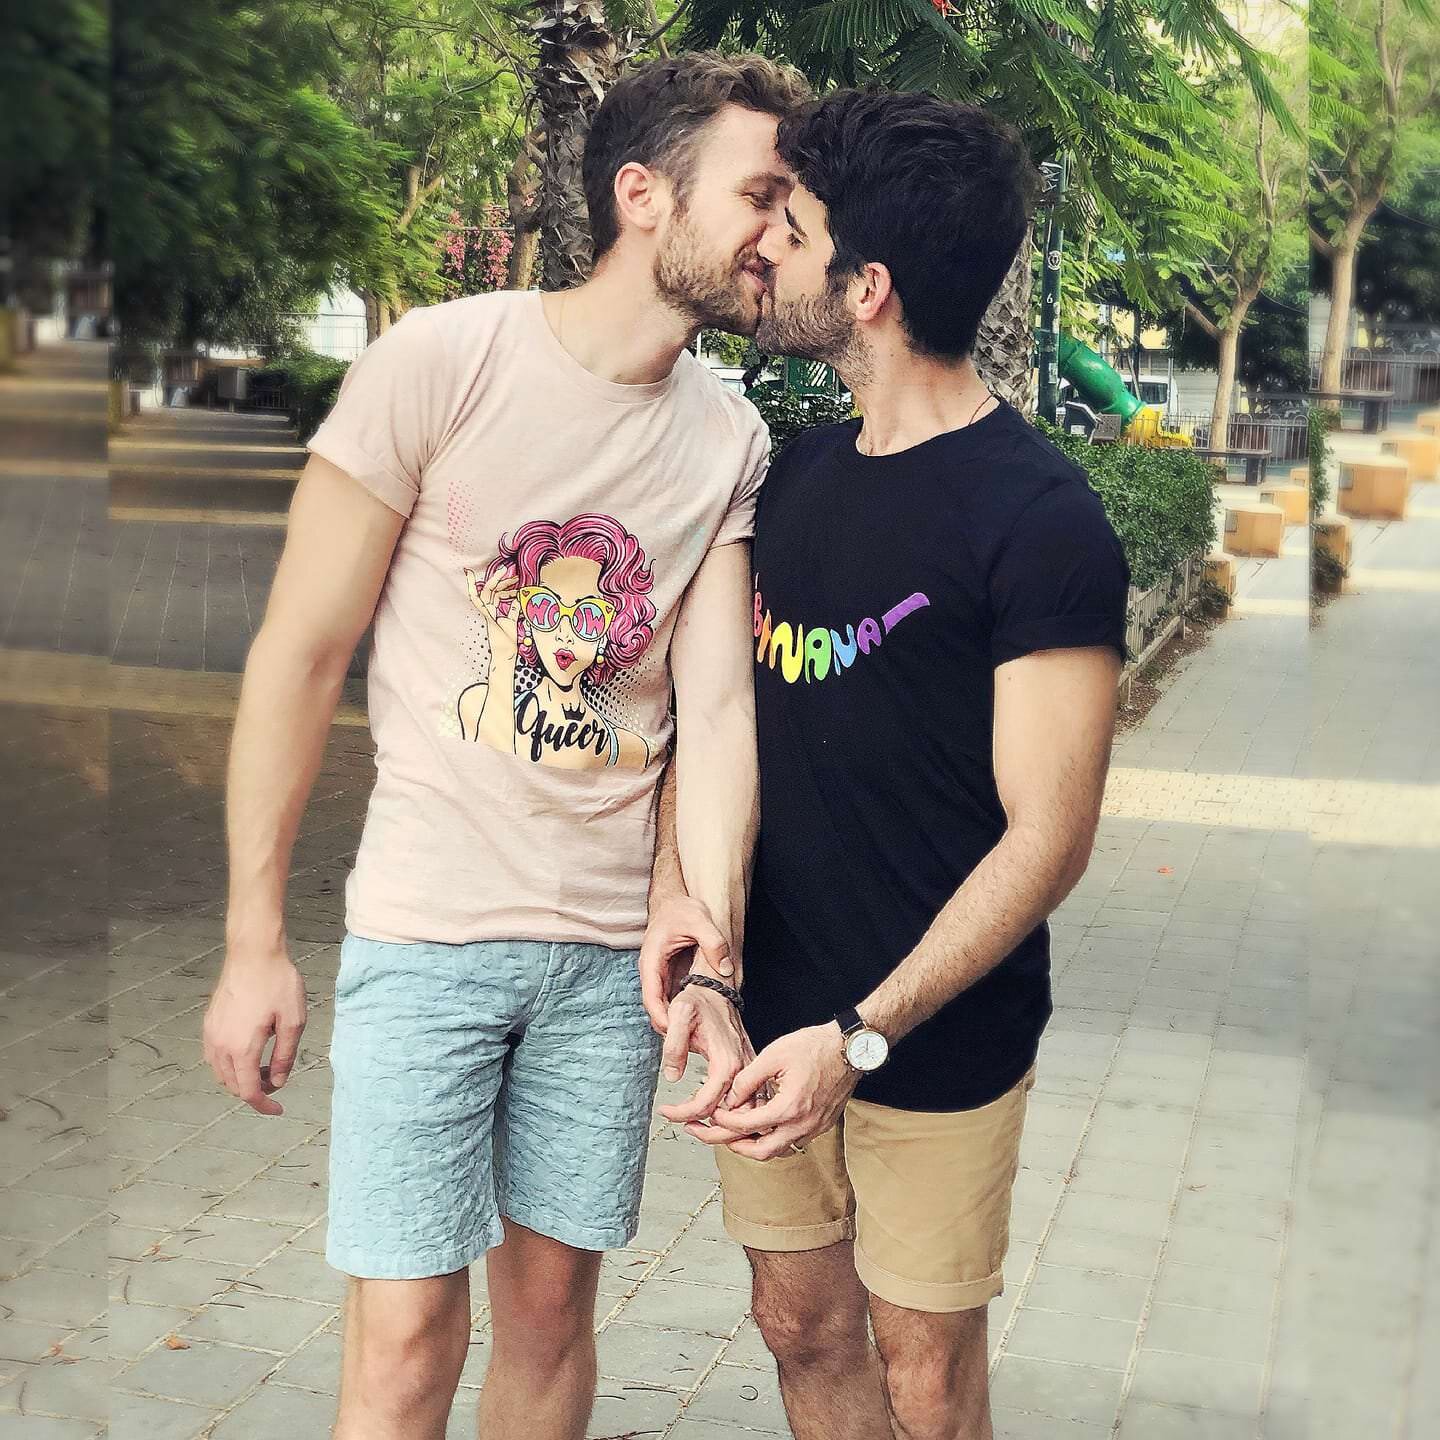 HOMOSEXUELL DATING LIBANON